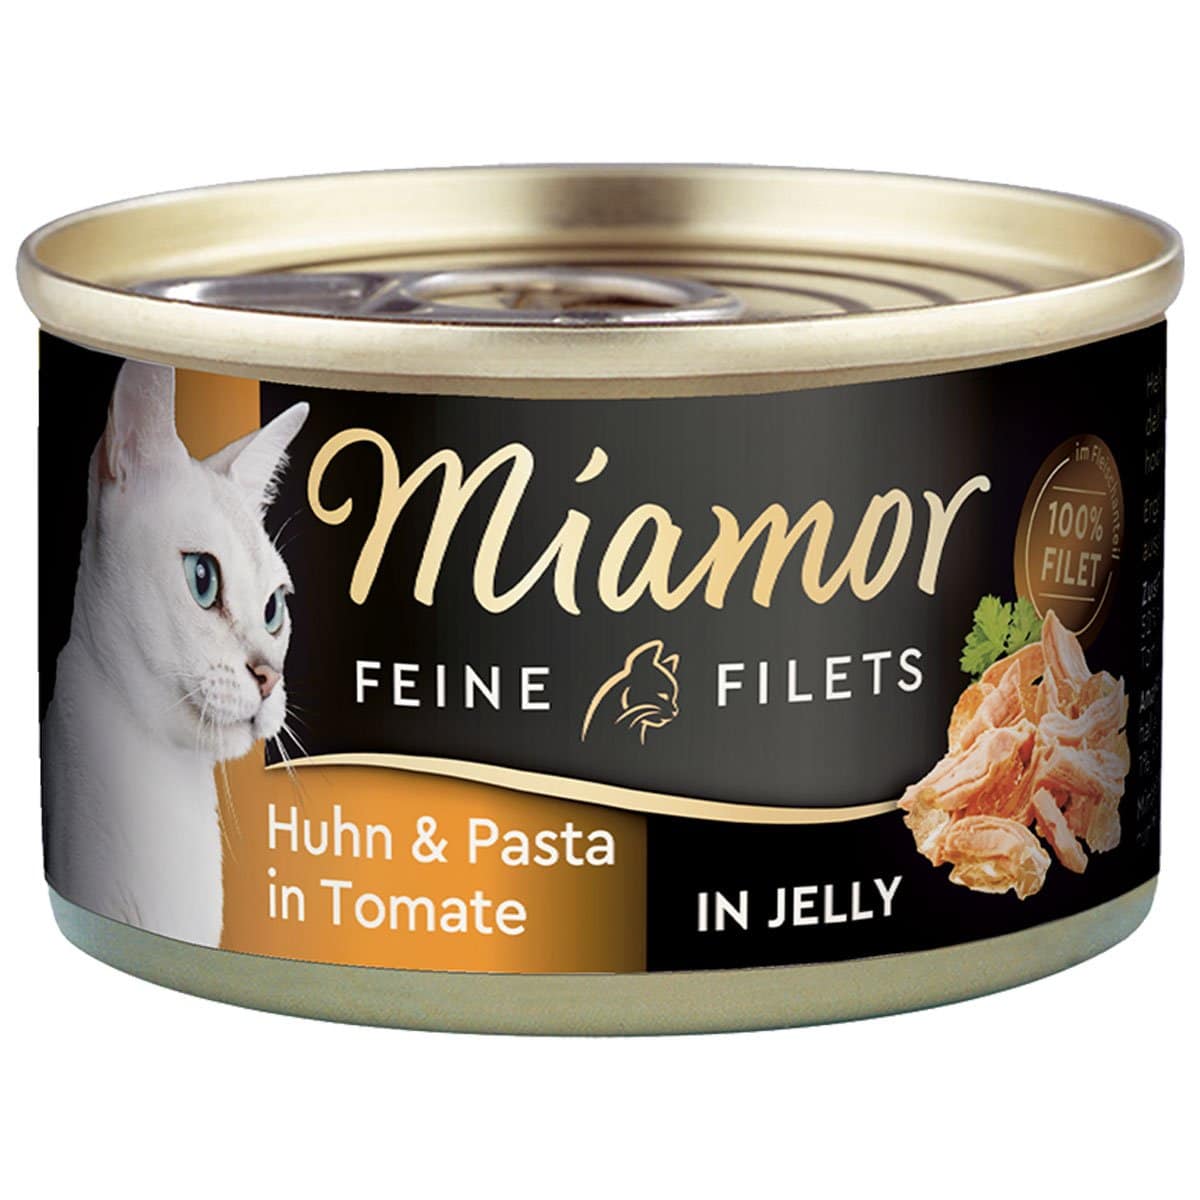 Miamor Feine Filets in Jelly Huhn und Pasta 100g Dose 24x100g